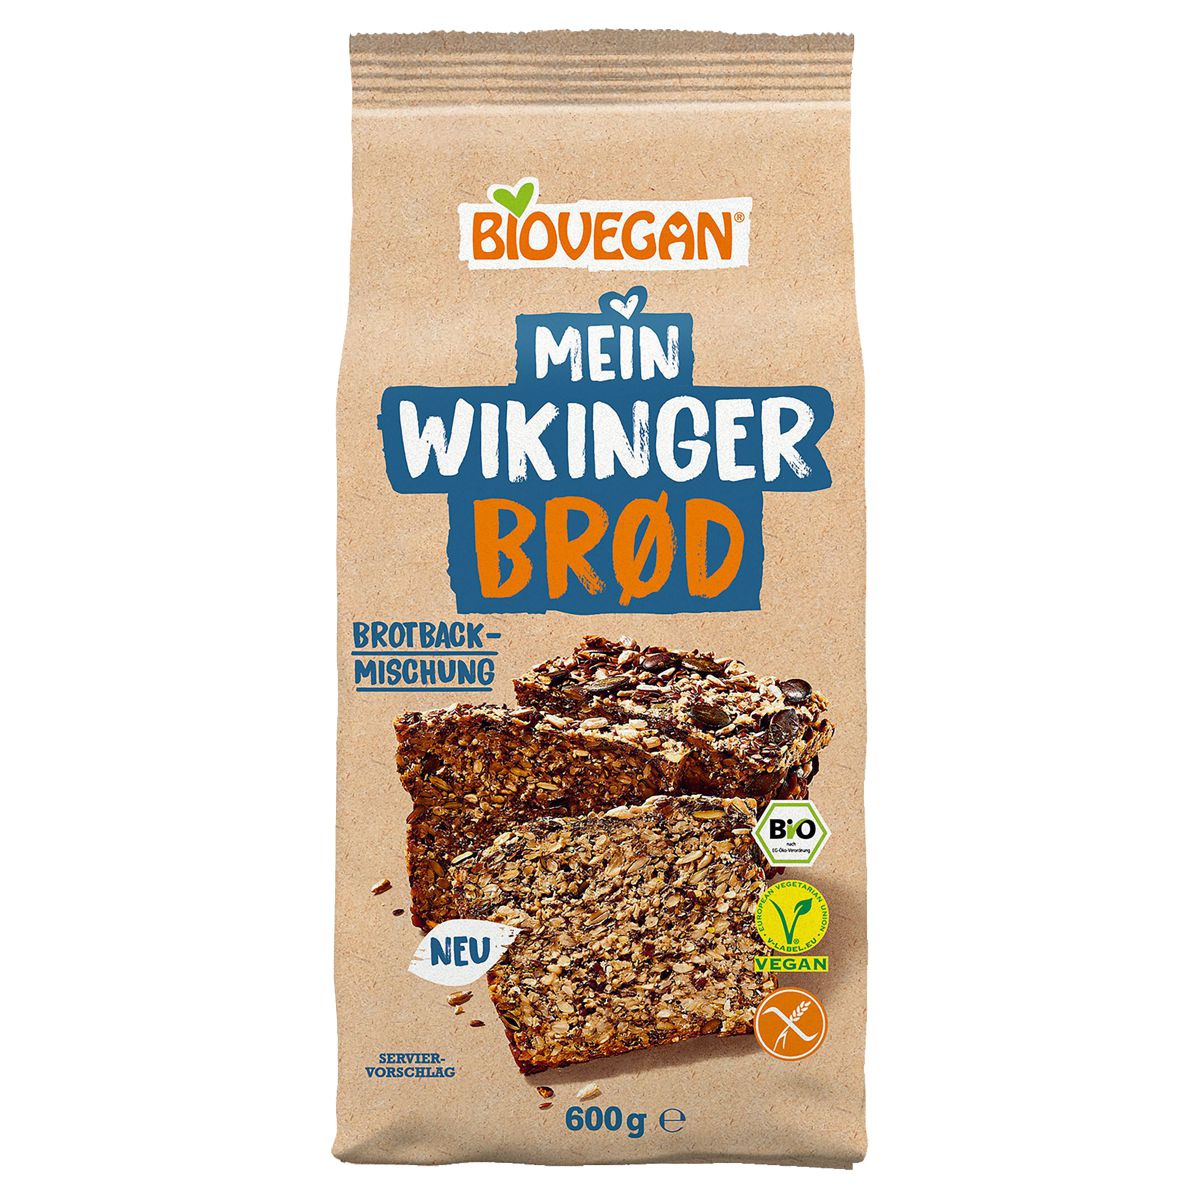 Biovegan Mein Wikinger Brod Brotbackmischung vegan 600 g